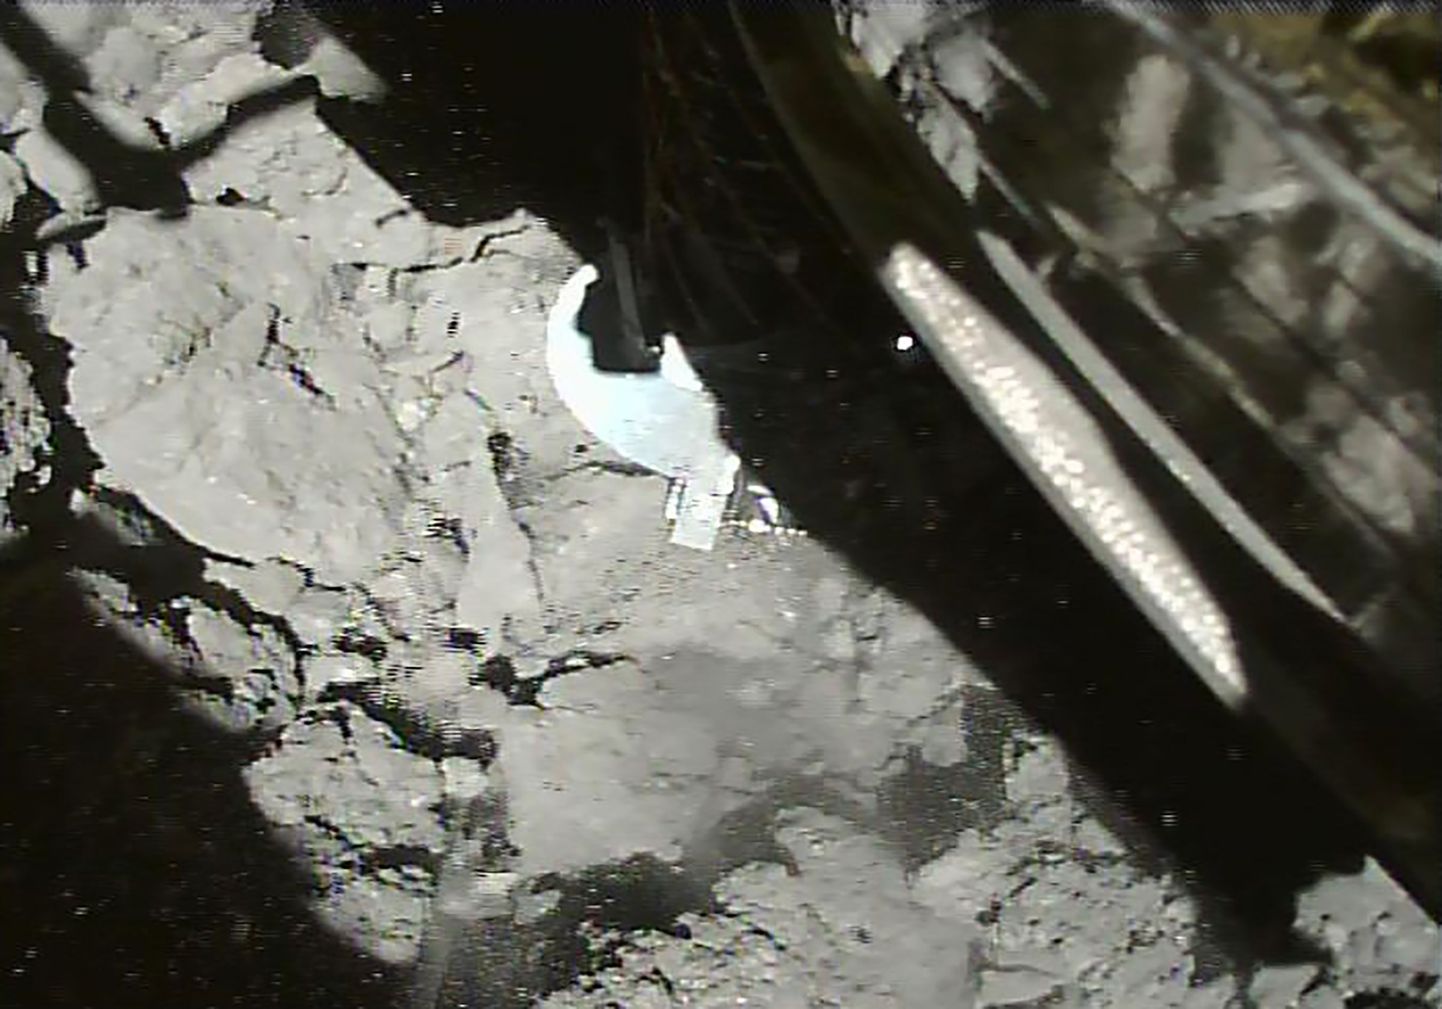 Hayabusa pardakaamera foto kosmoseaparaadi asteroidi pinnale toetuvast jalast.